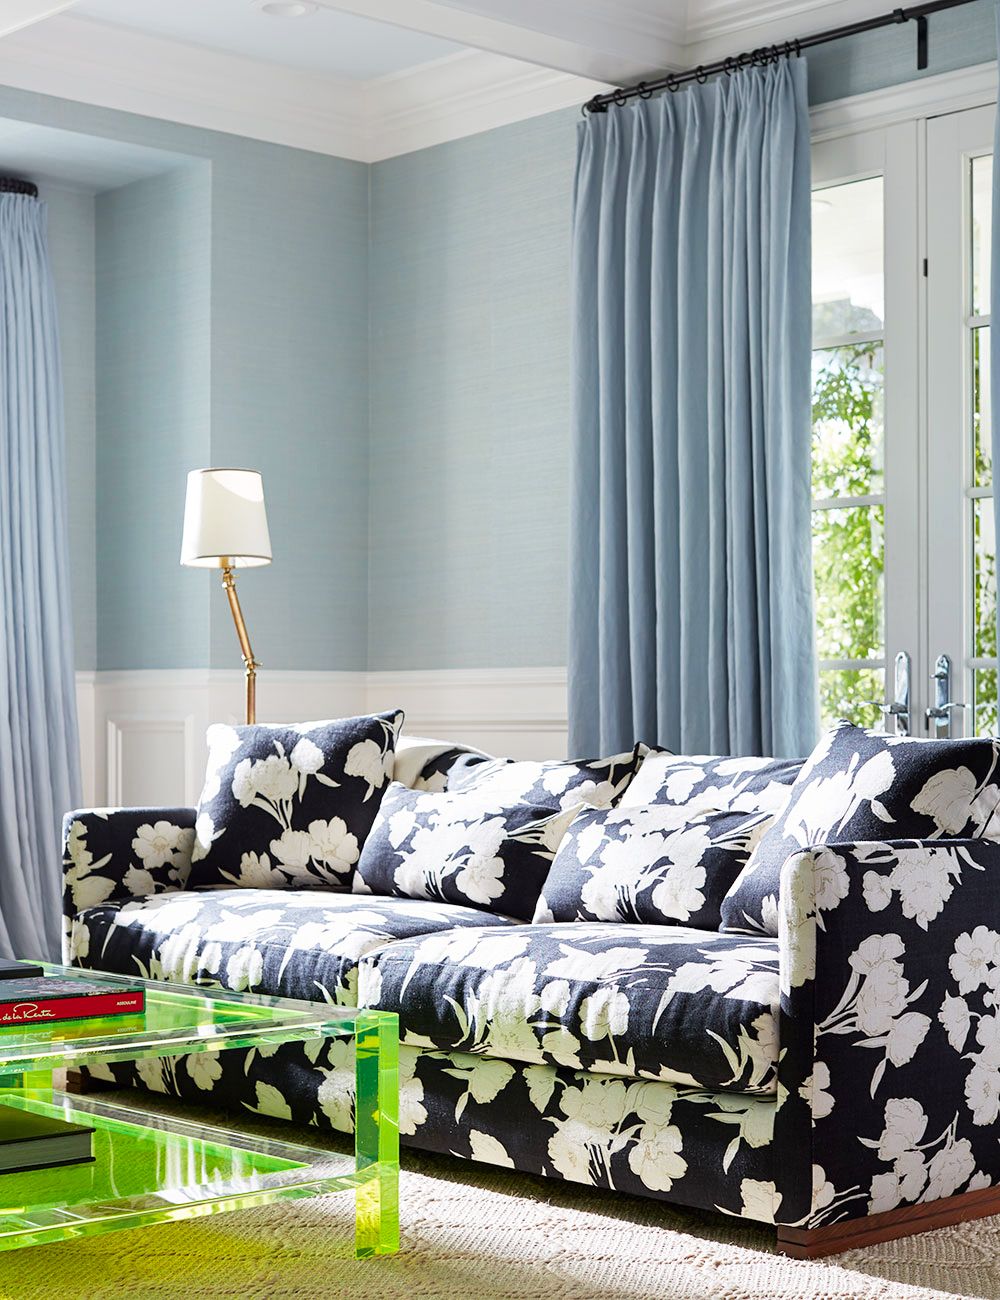 40 Best Living Room Color Ideas Top, Living Room Paint Design Images